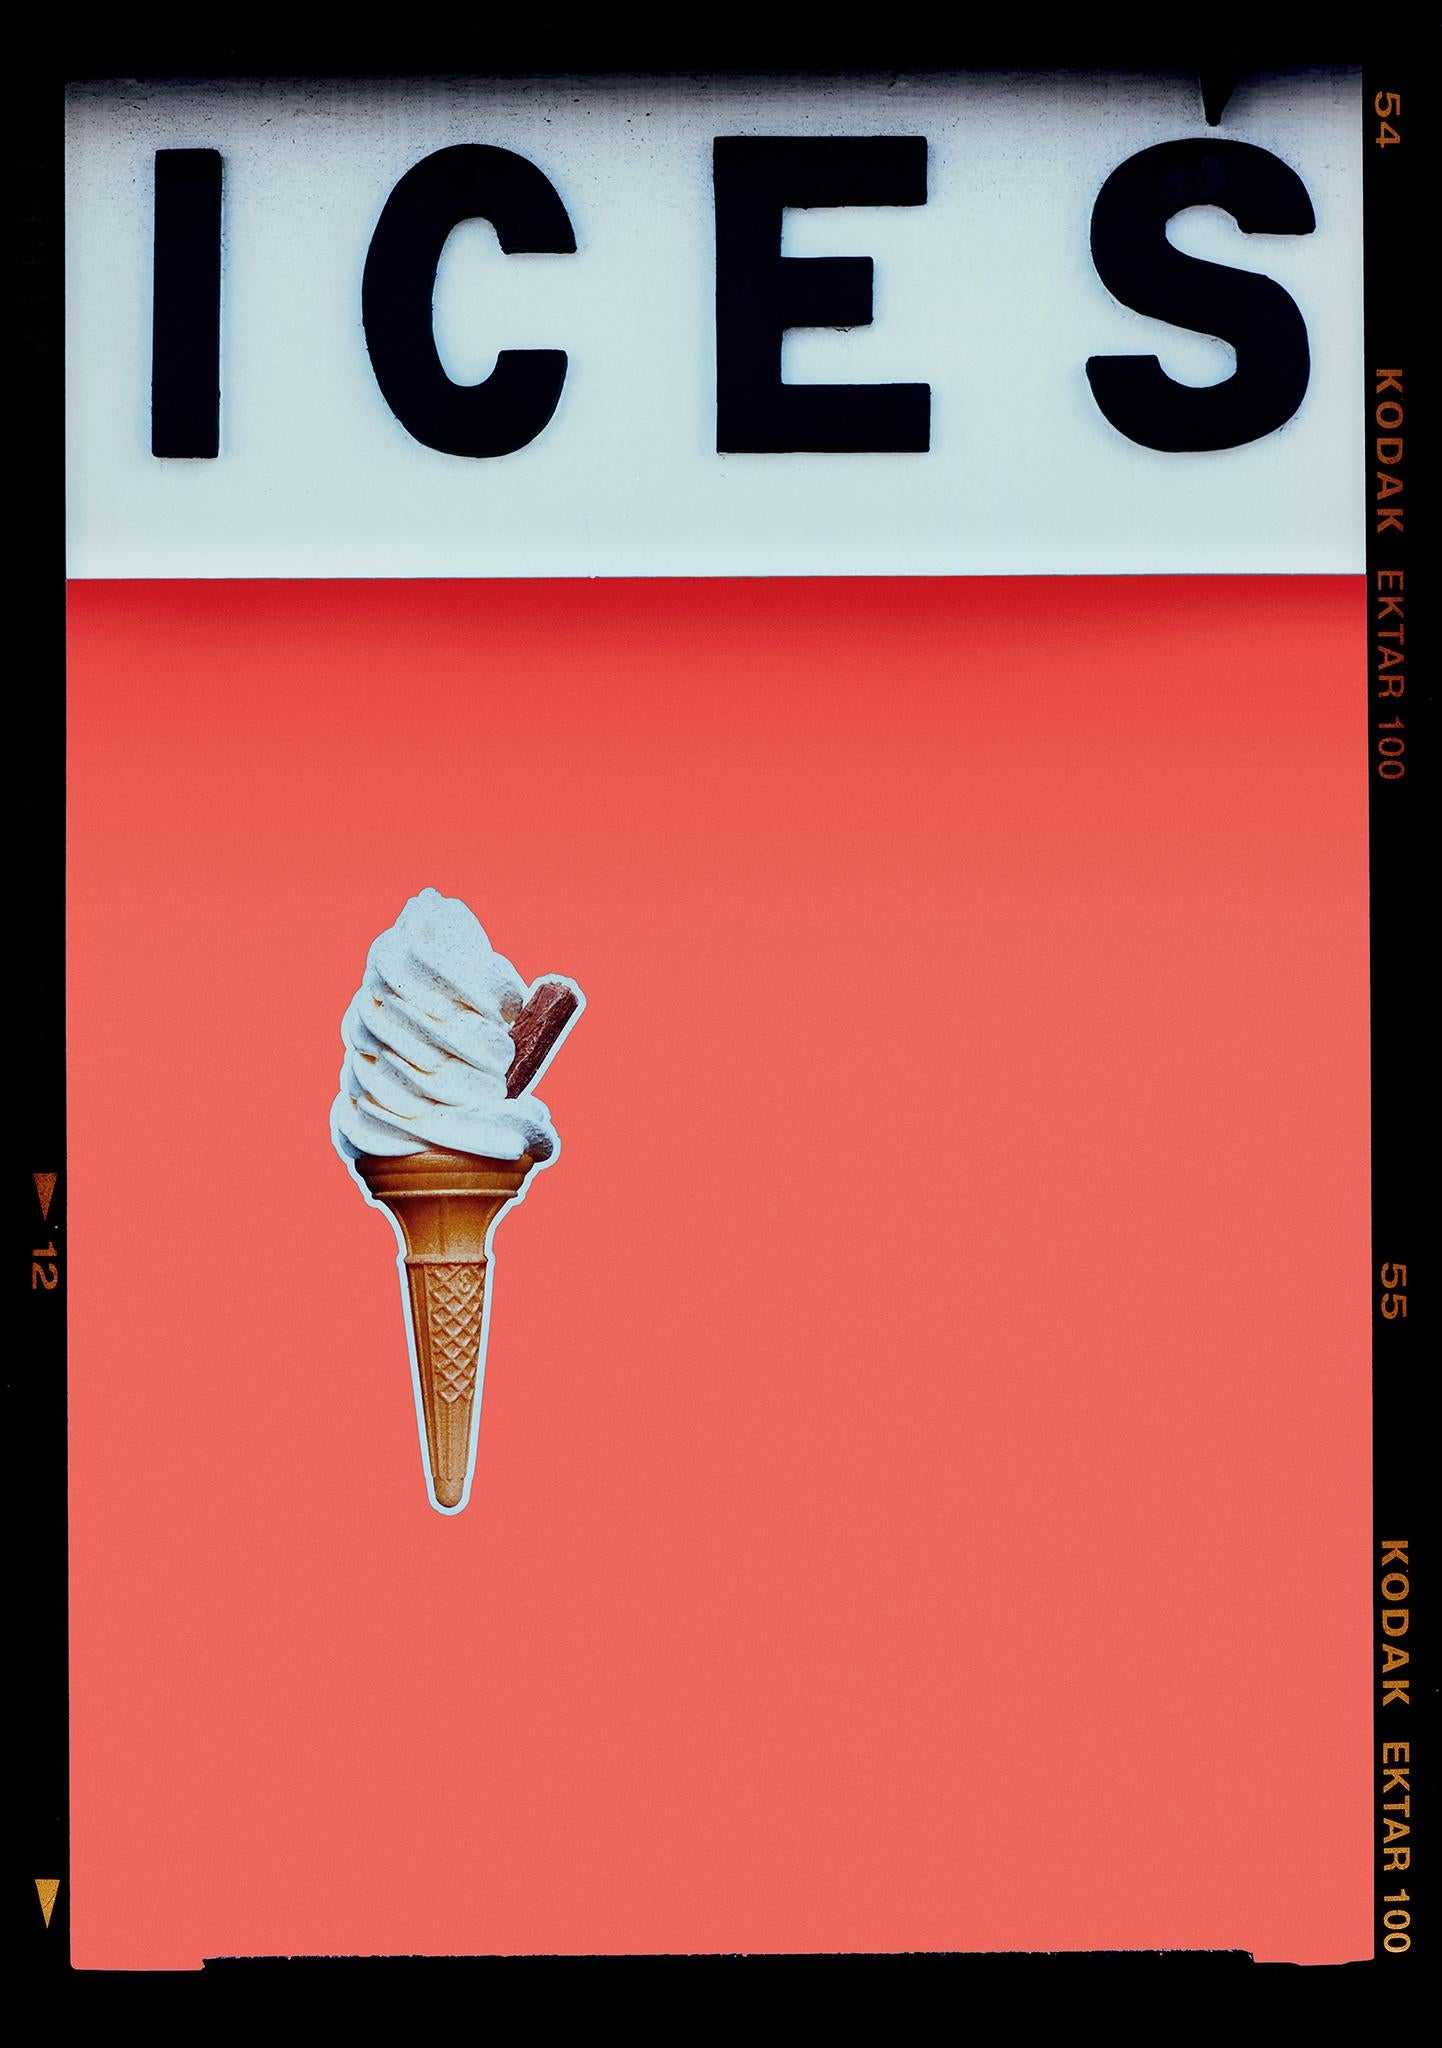 Richard Heeps Print – Ices (Melondrama), Bexhill-on-Sea – Farbfotografie am Meer